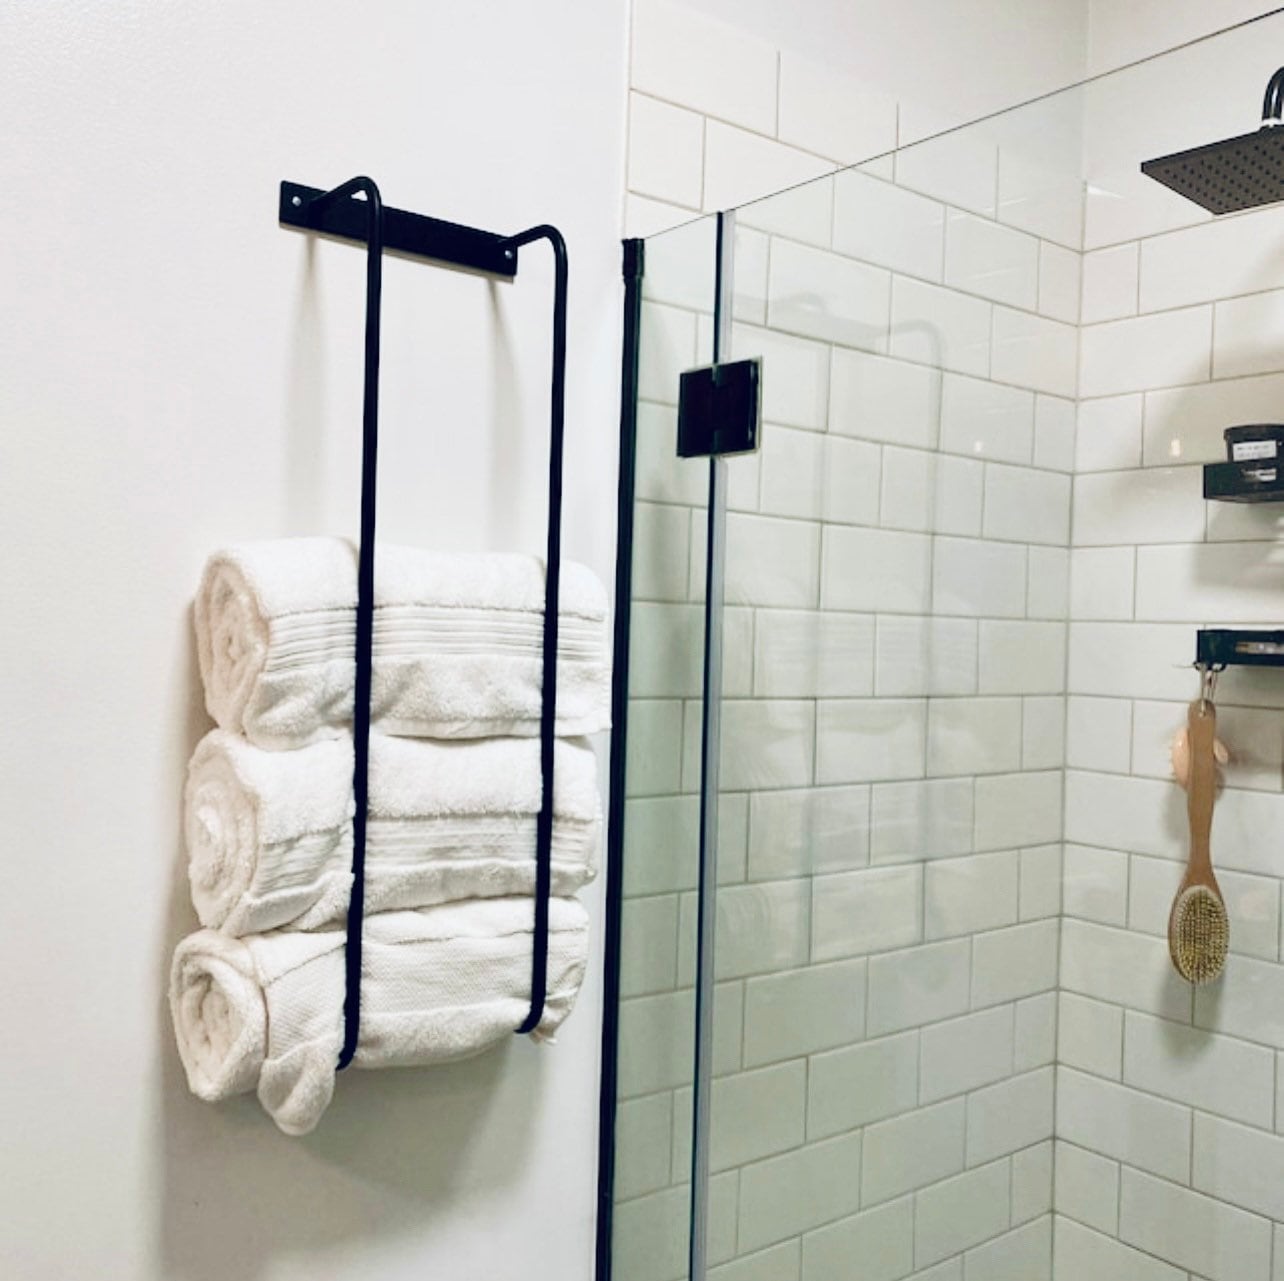 Bathroom Towel Storage, Wall Storage, Bathroom Decor, Towel